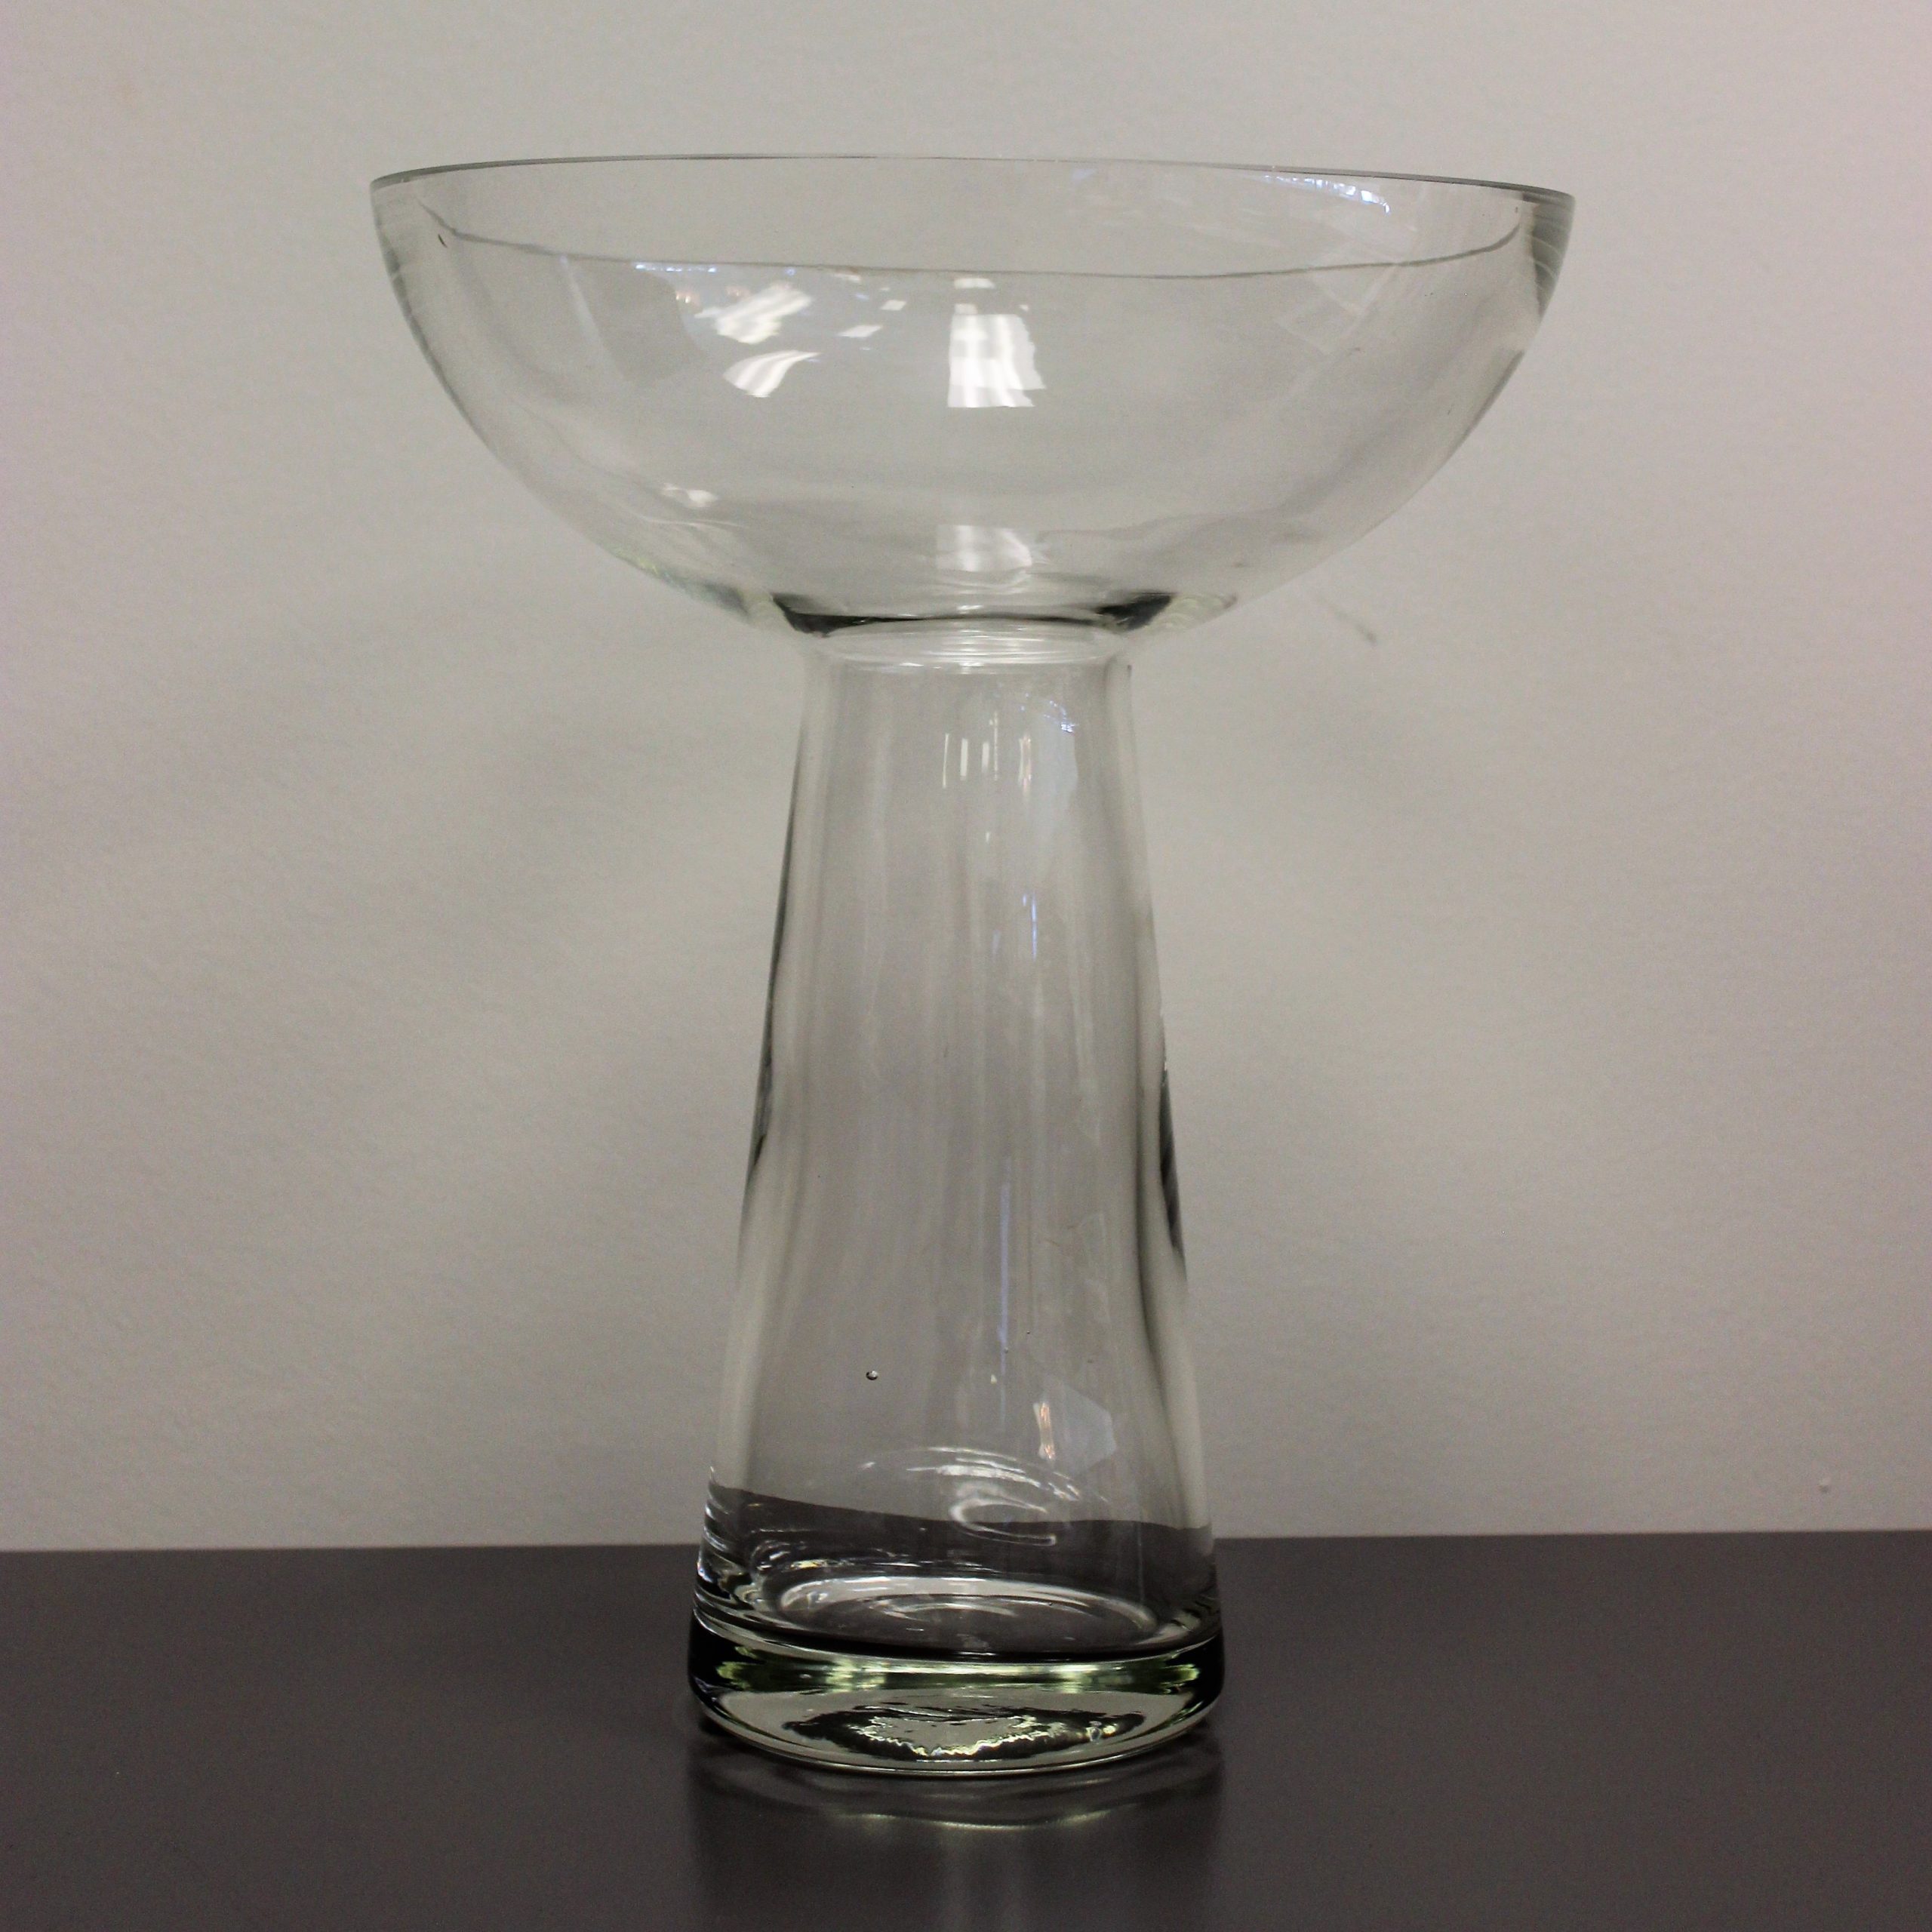 Ddk Design Glass Vase Creations Center Design Home Decor